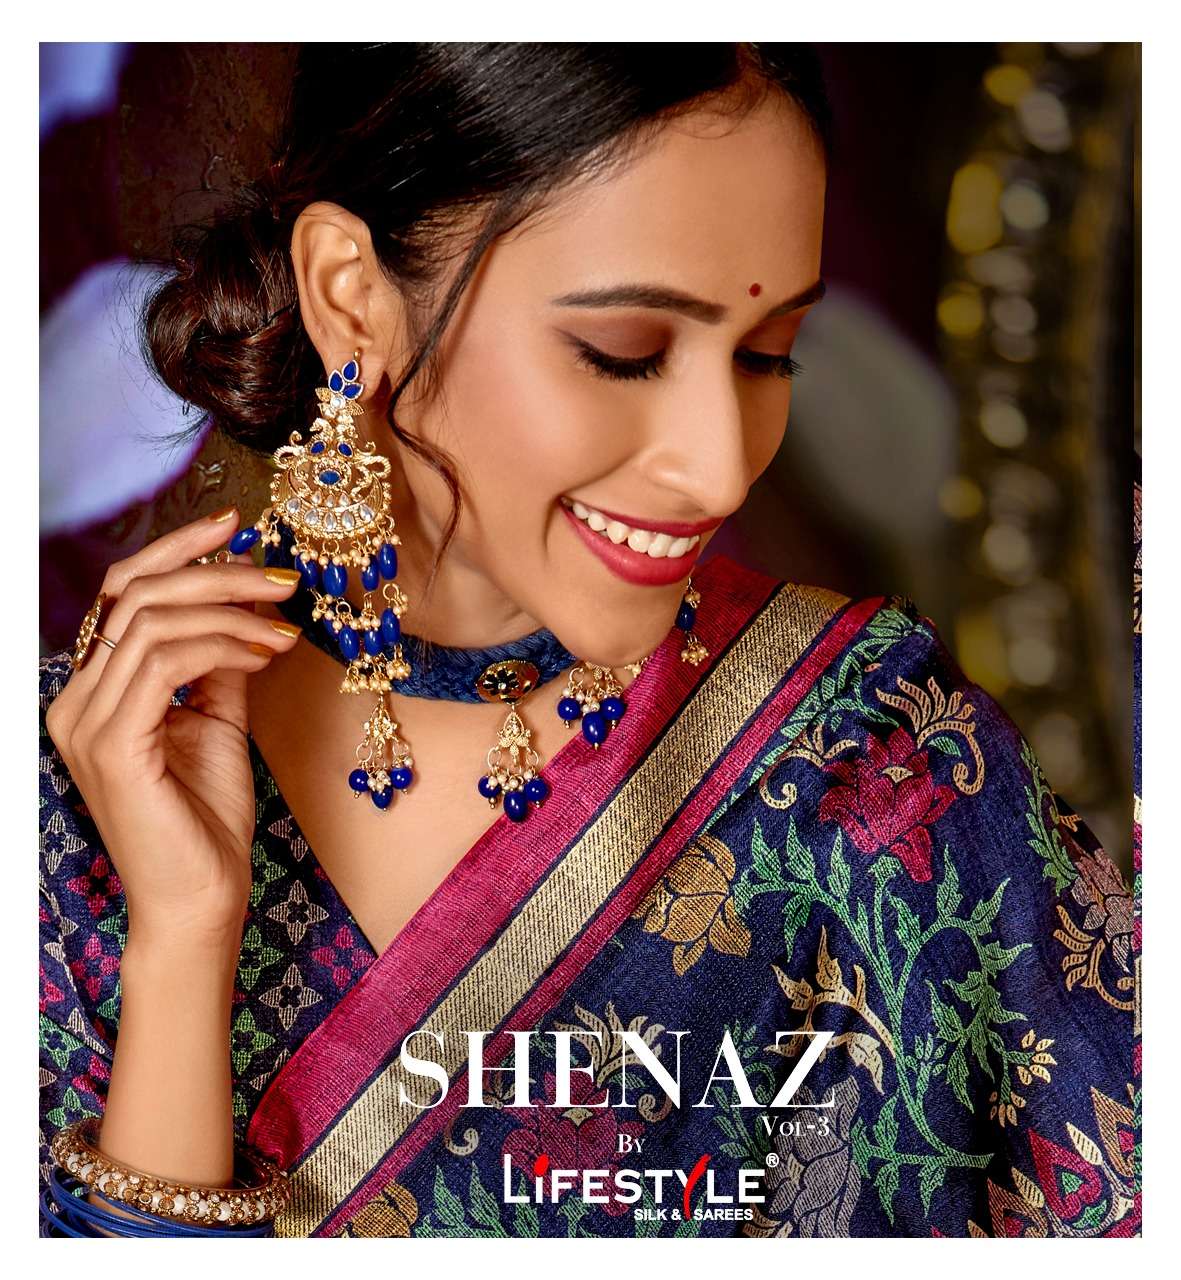 Lifestyle Shenaz Foil Print Silk Saree New Catalogs at Best Price